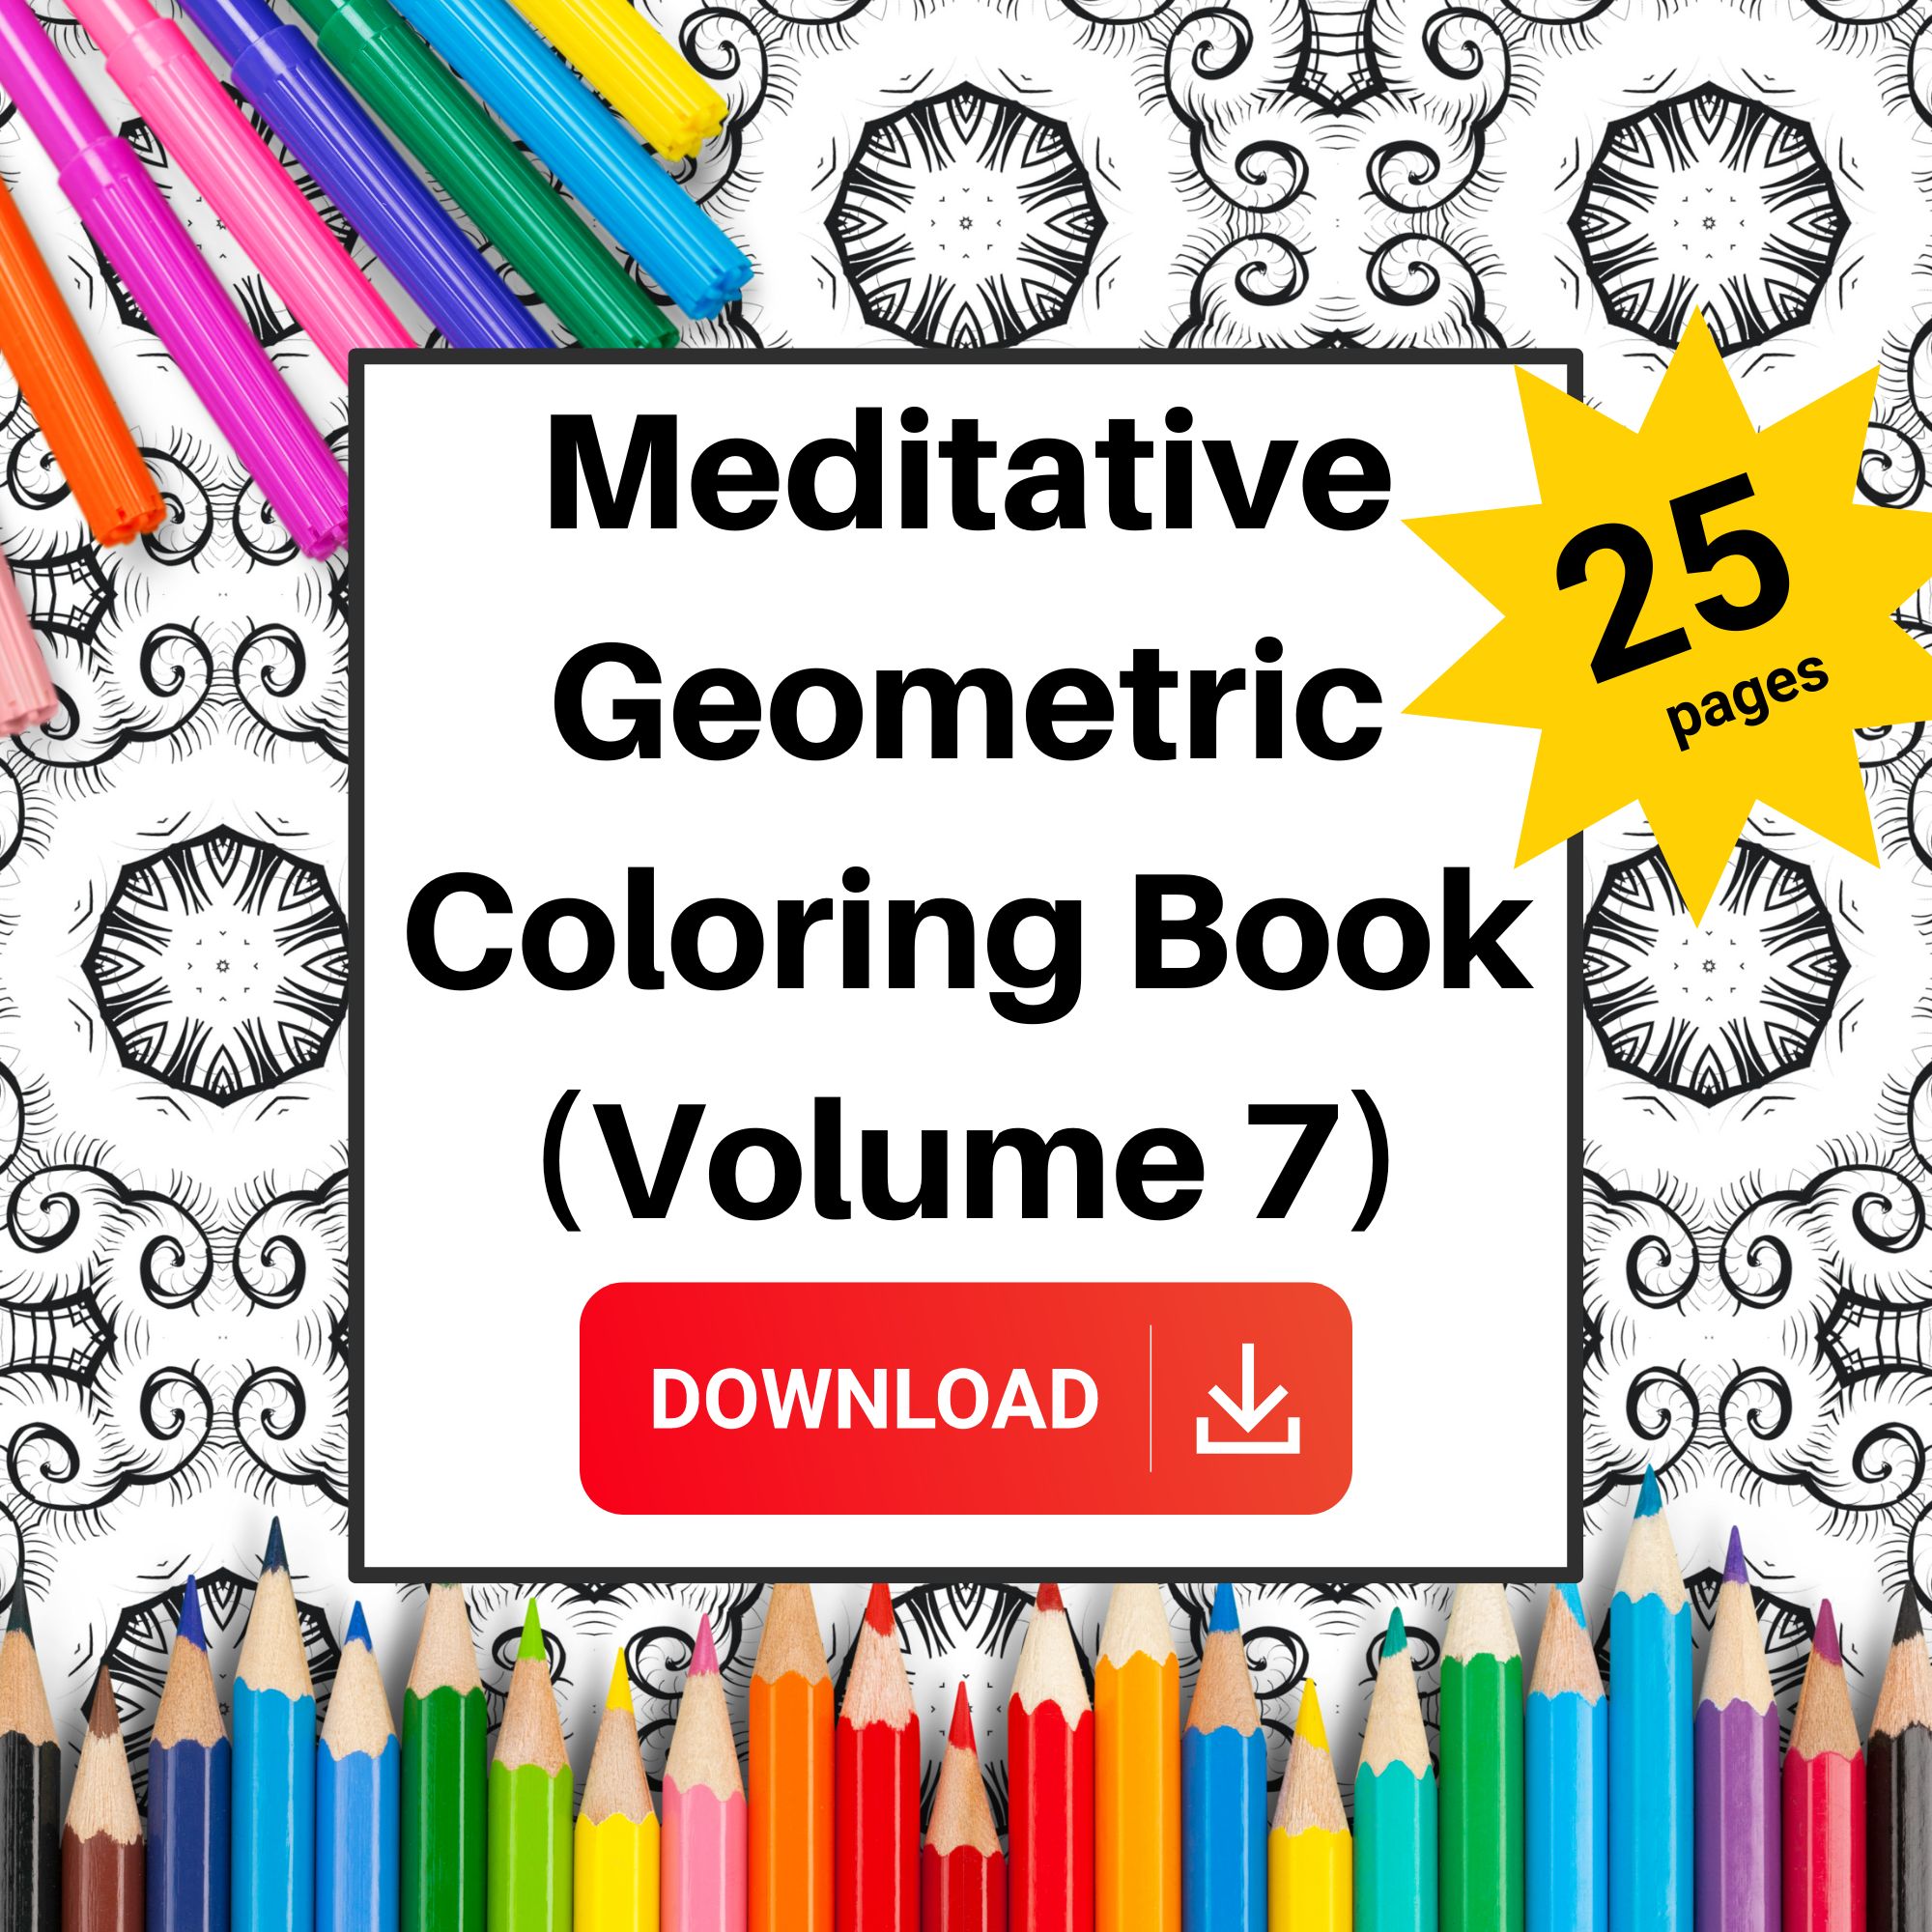 Meditative Geometric Coloring Book (Vol 7)